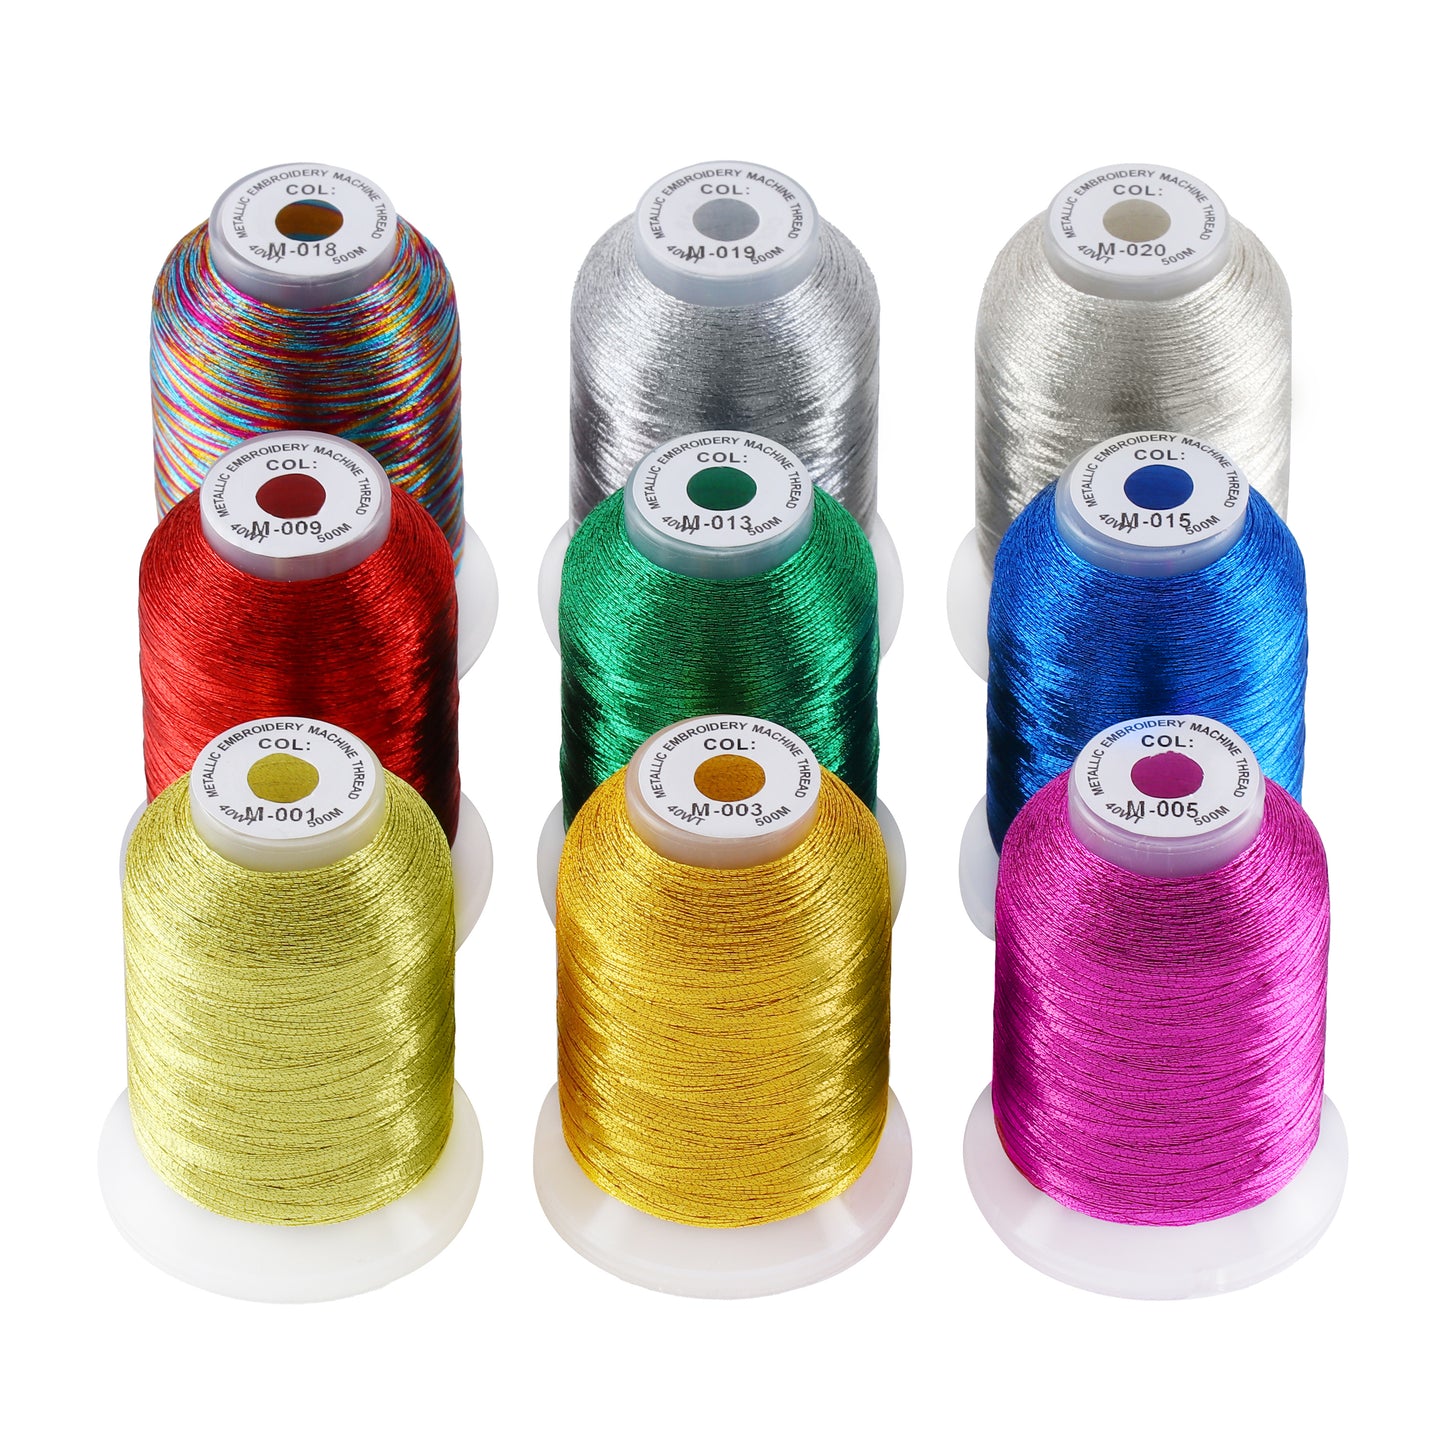 New Brothread 9 Basic Colors Metallic Embroidery Machine Thread Kit 500M (550Y) Each